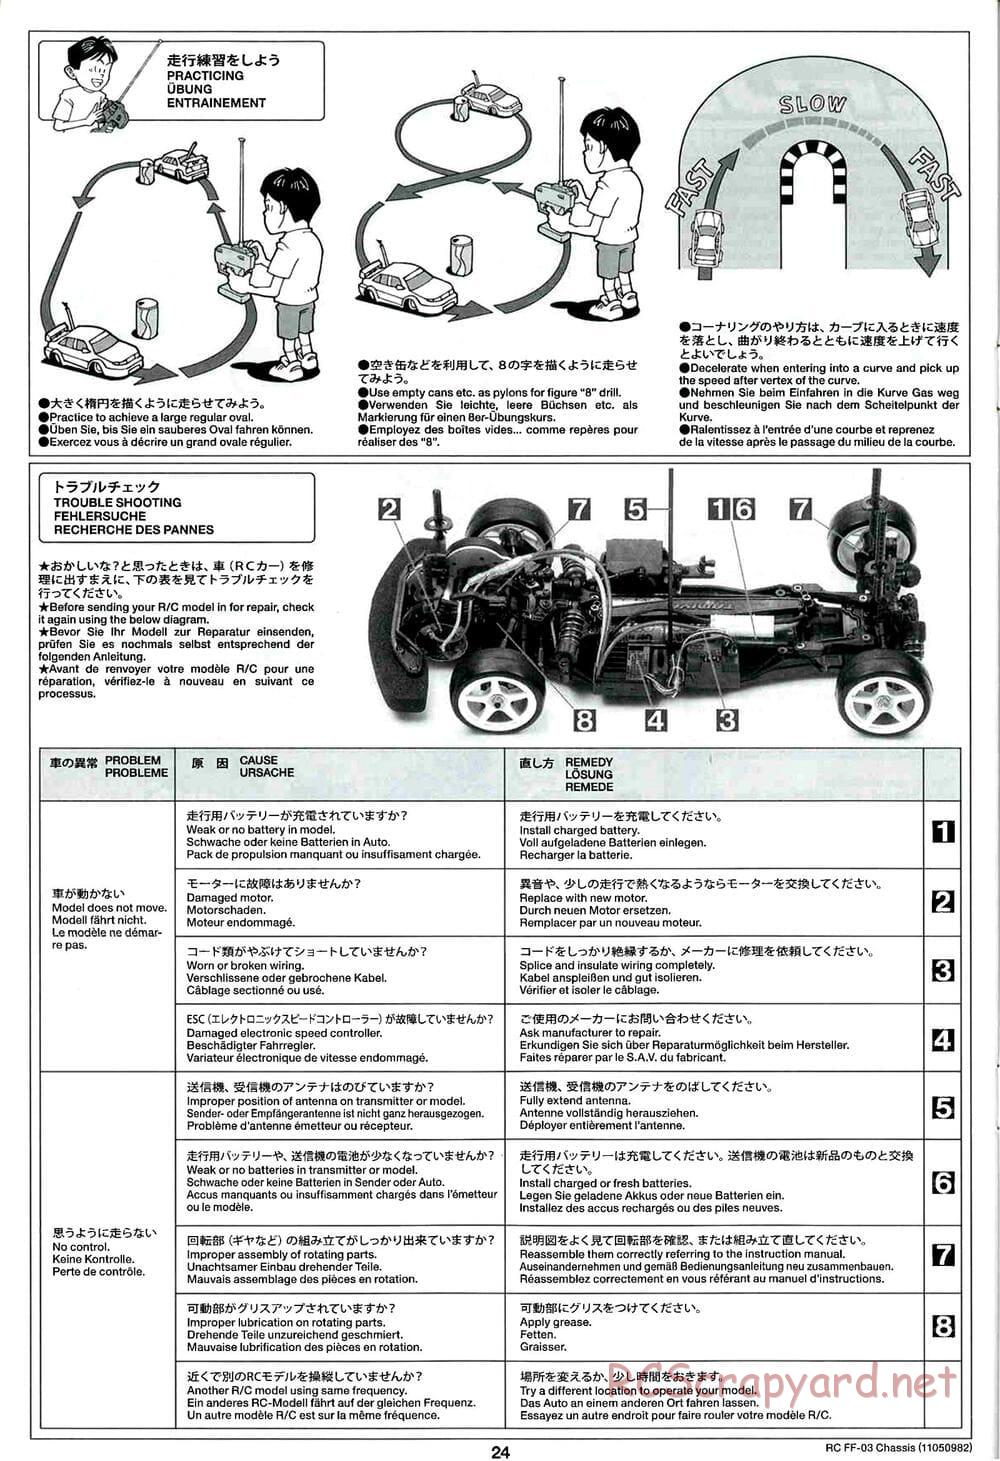 Tamiya - FF-03 Chassis - Manual - Page 24